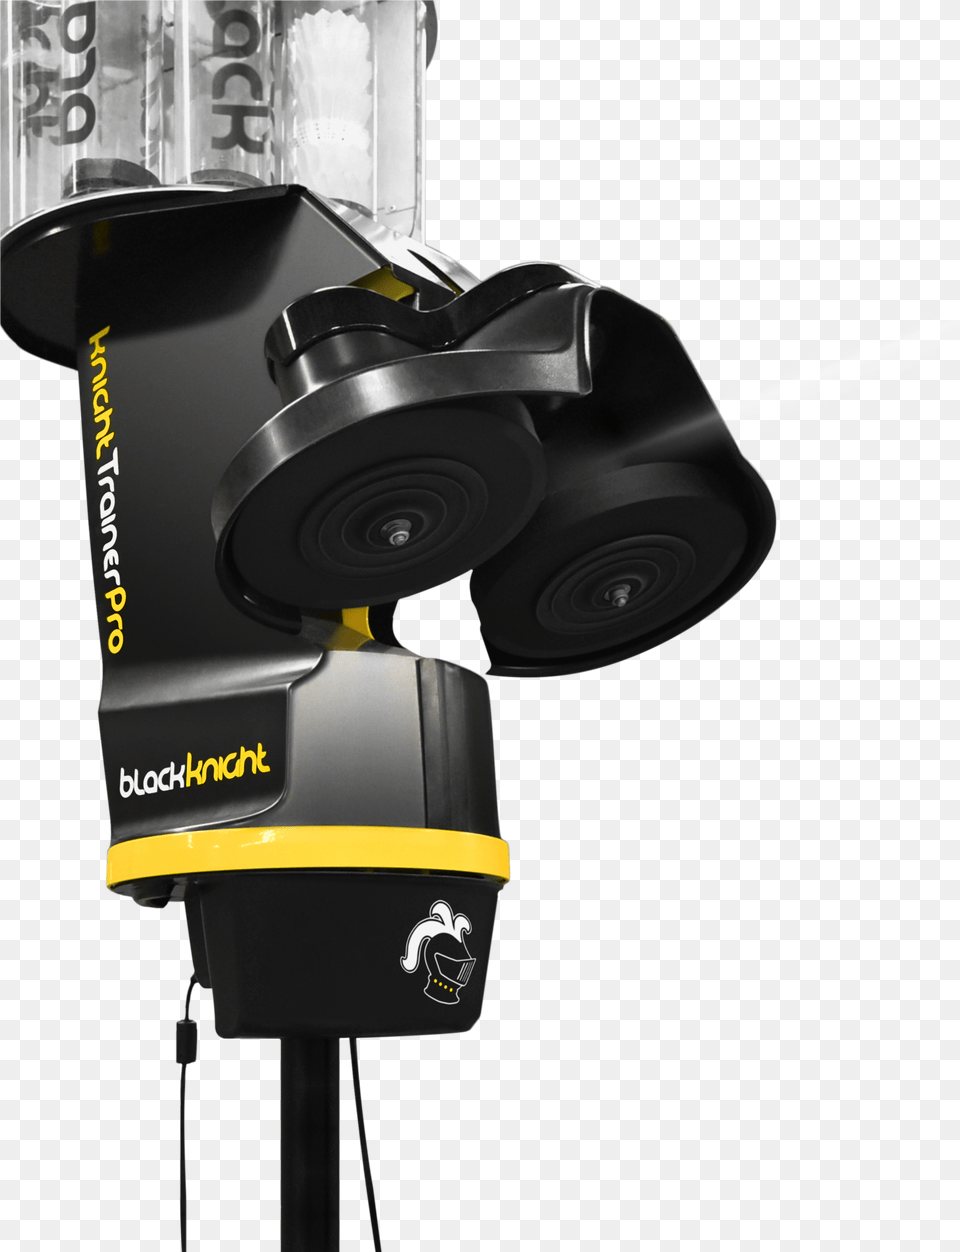 Revolutionized Badminton Robot Launch Crowns Black Knightu0027s Film Camera, Electronics, Video Camera, Device Png Image